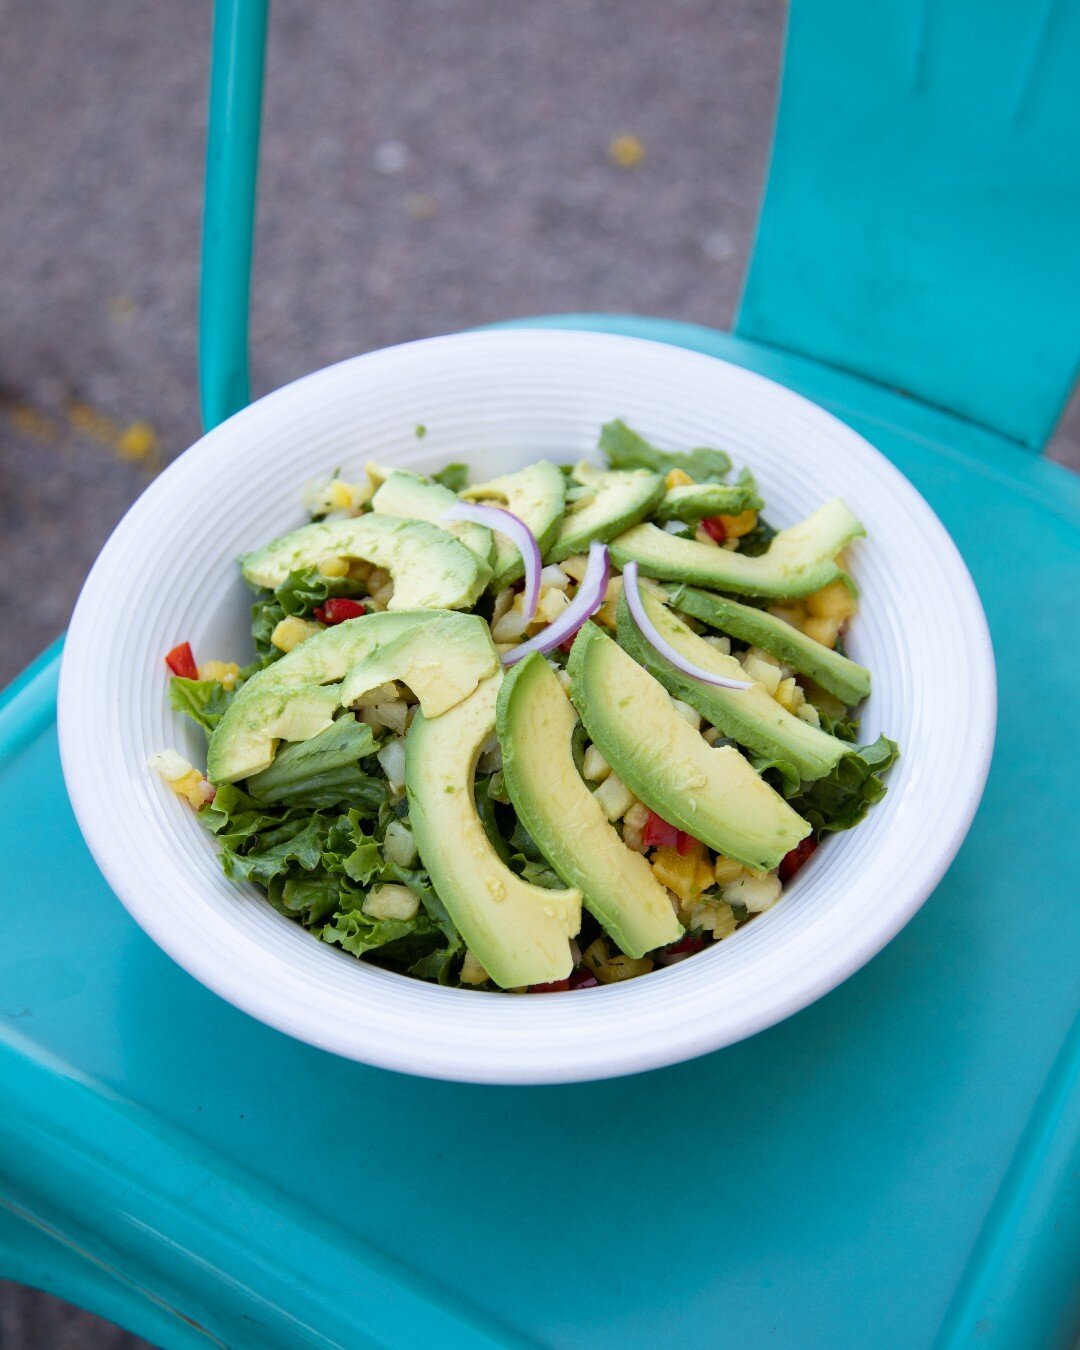 Enjoy our fresh Pineapple Avocado Salad, perfect for the summer season! 🌞